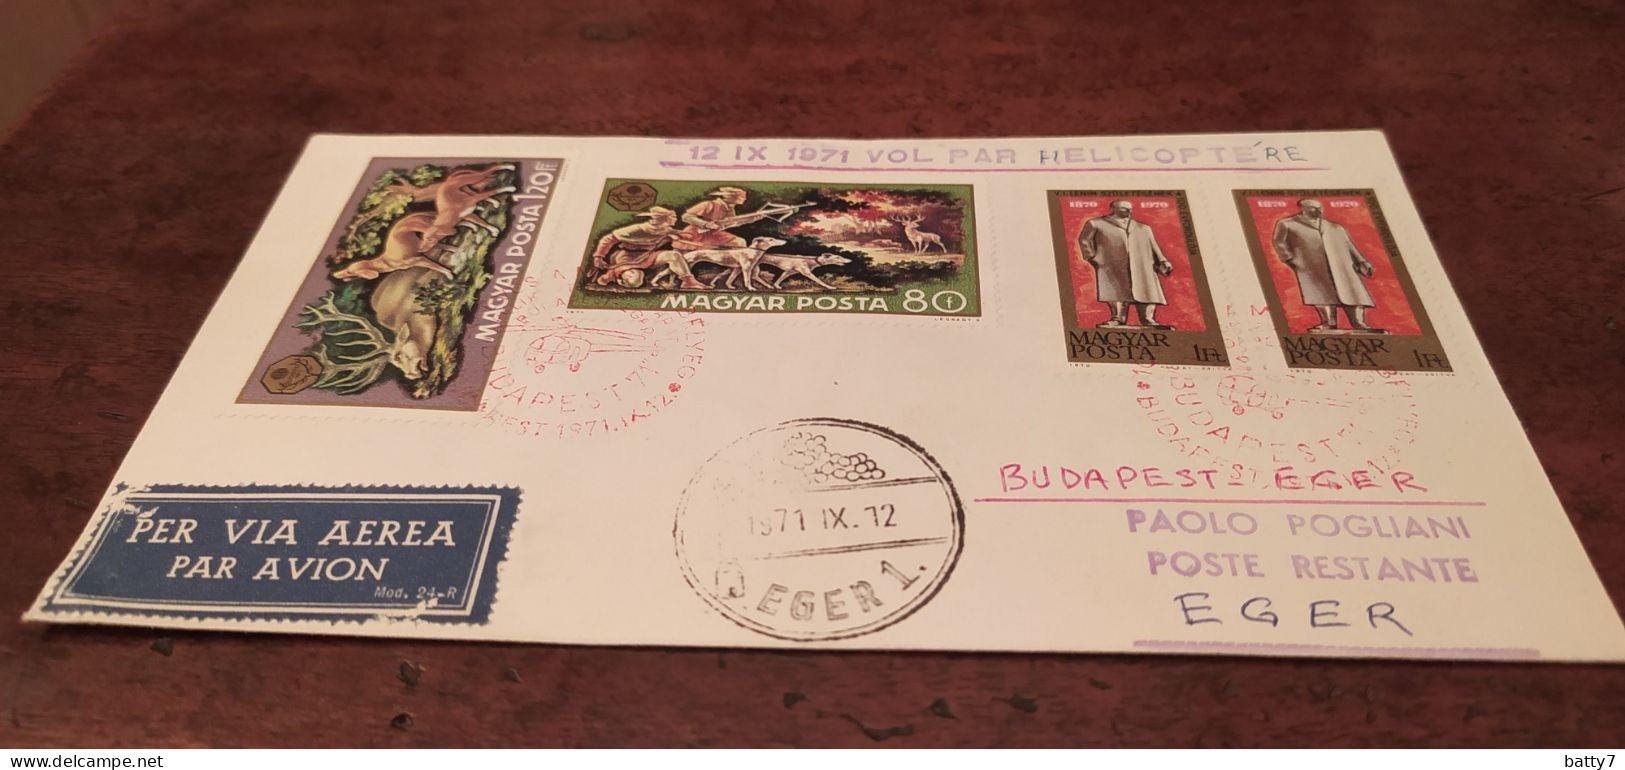 UNGHERIA - MAGYAR POSTA - 1971 VOLO IN ELICOTTERO - Postmark Collection